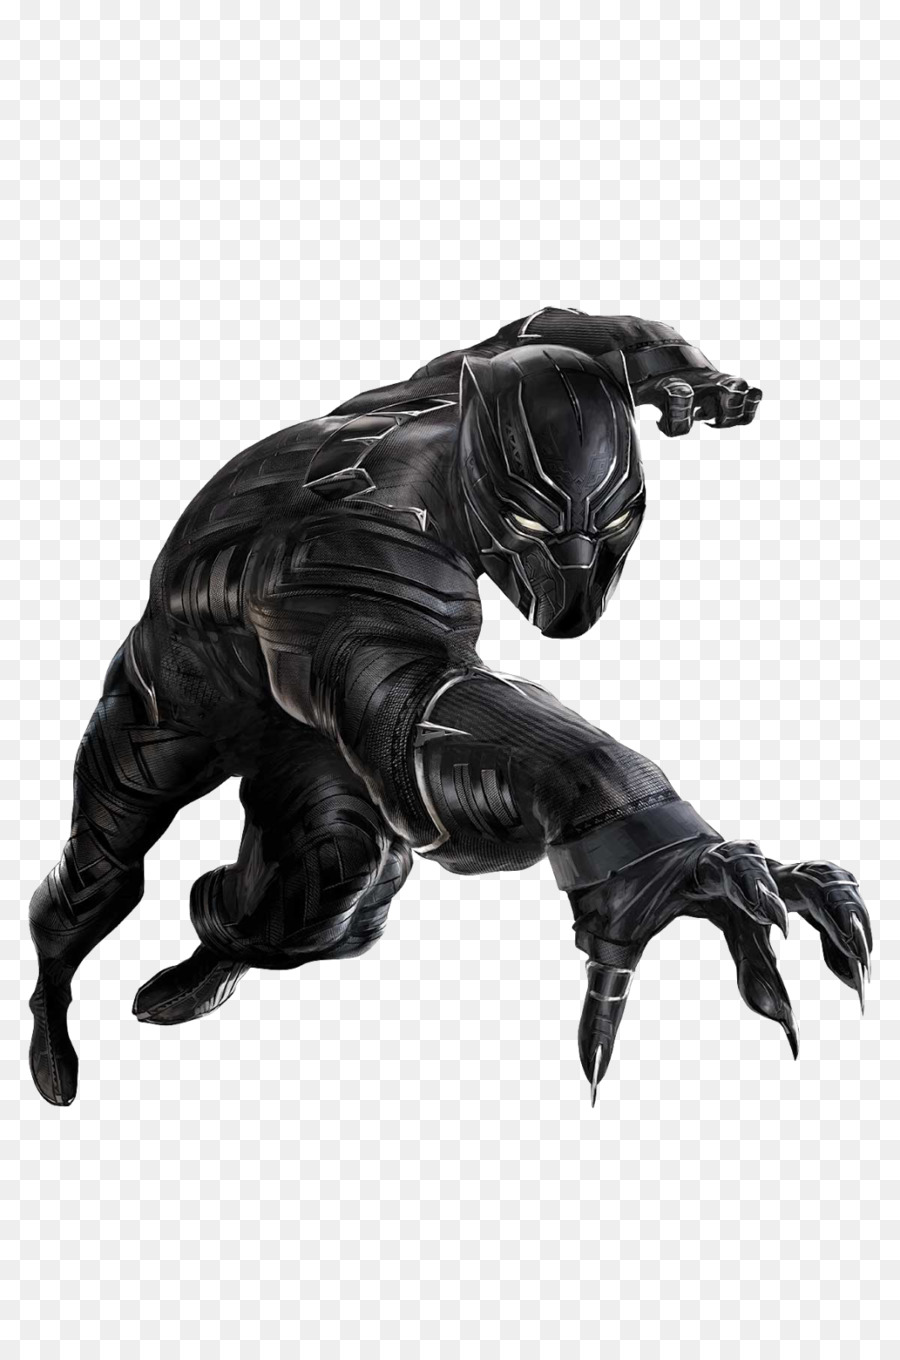 Marvel black panther clipart